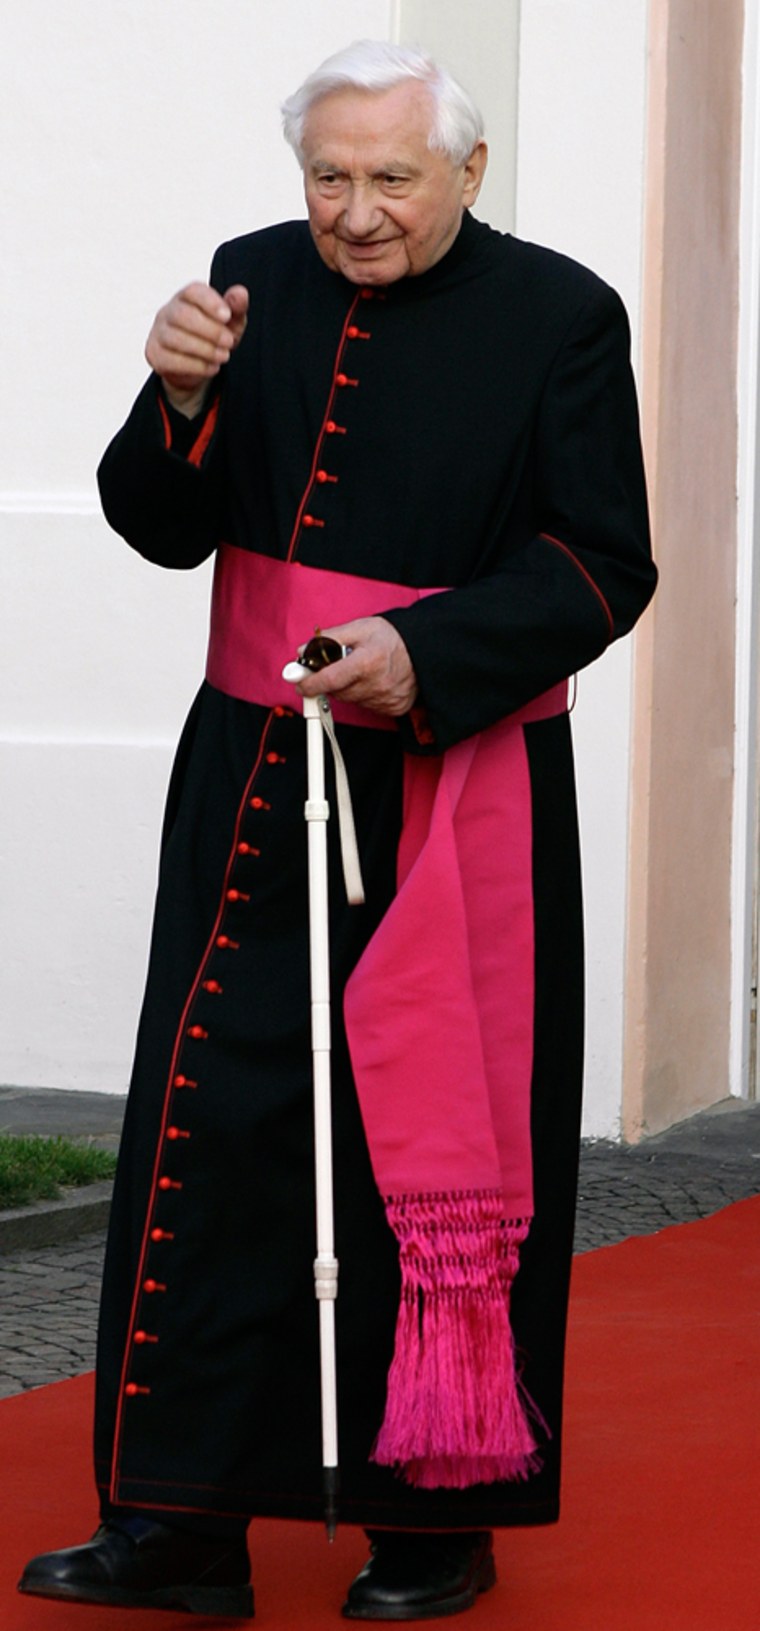 Image: Georg Ratzinger